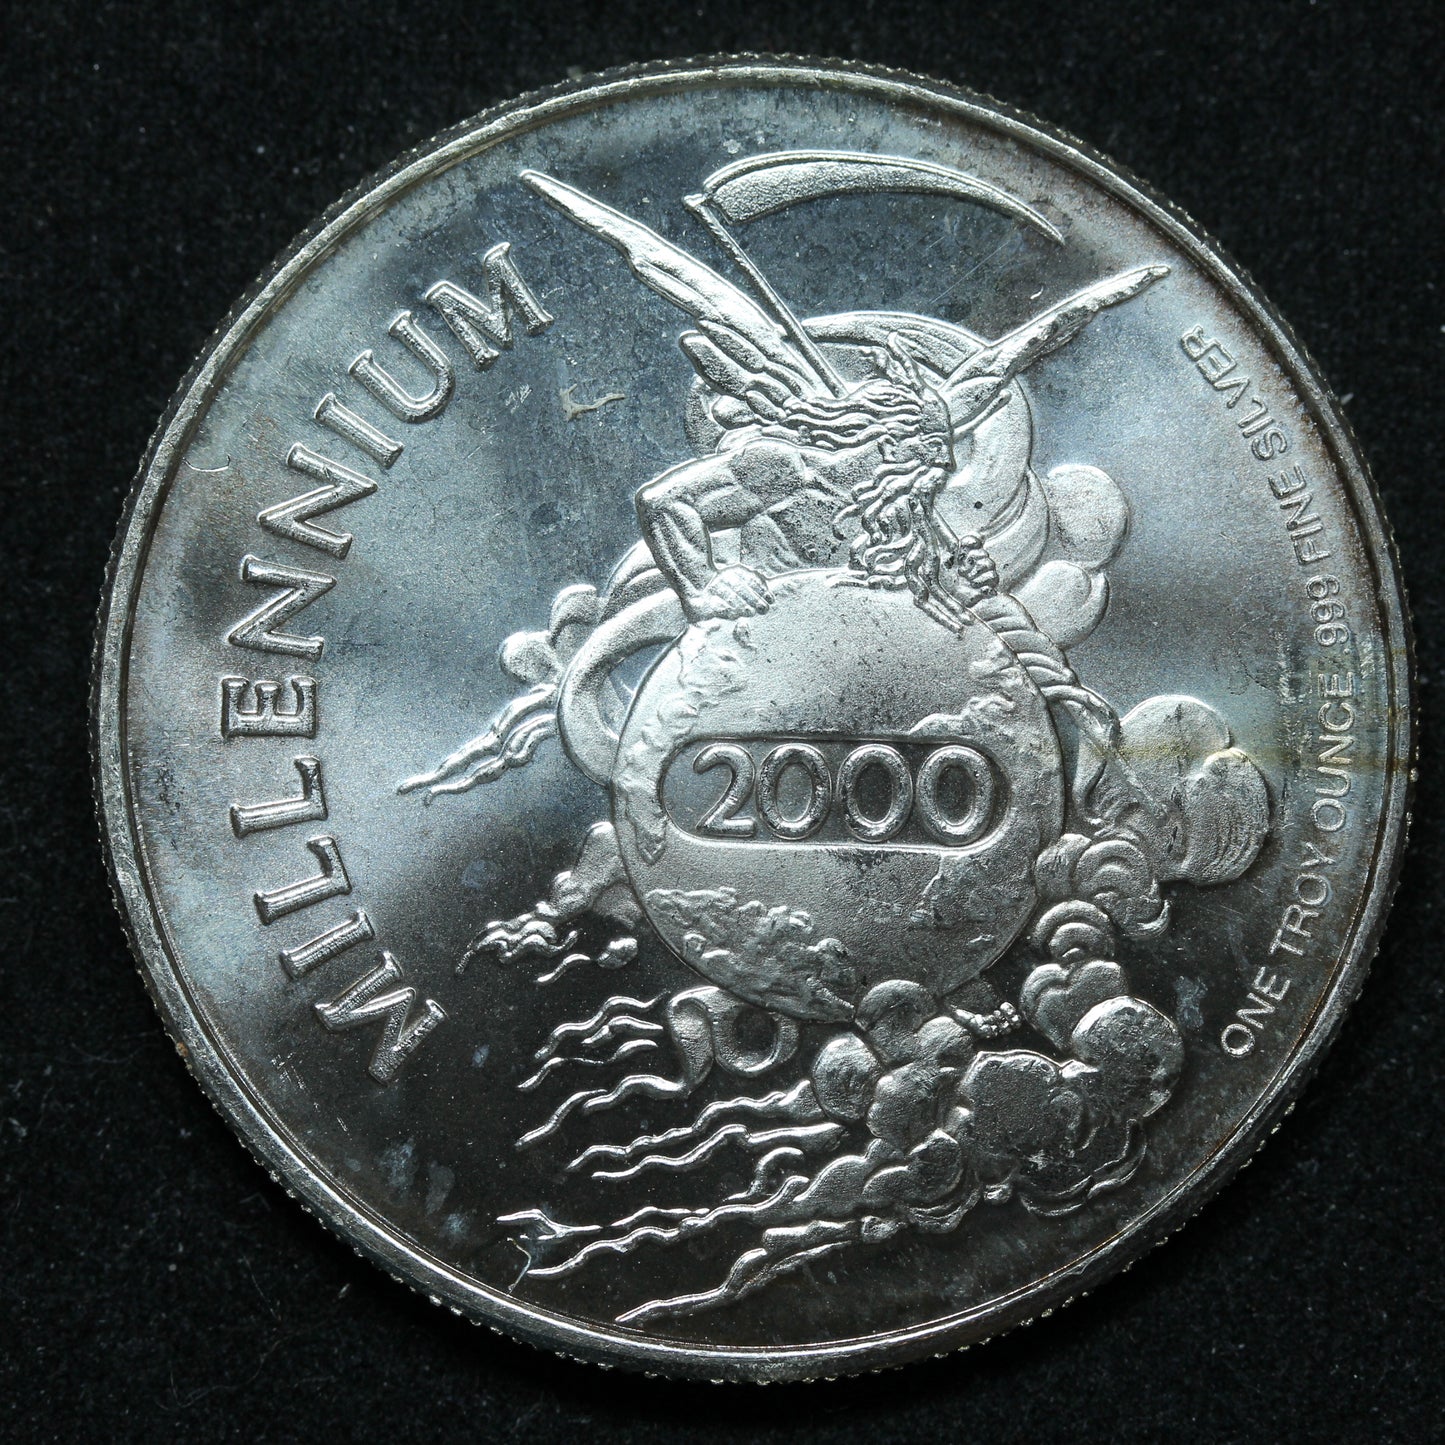 1 oz .999 Fine Silver - 20th Century Millennium 2000 Astronaut